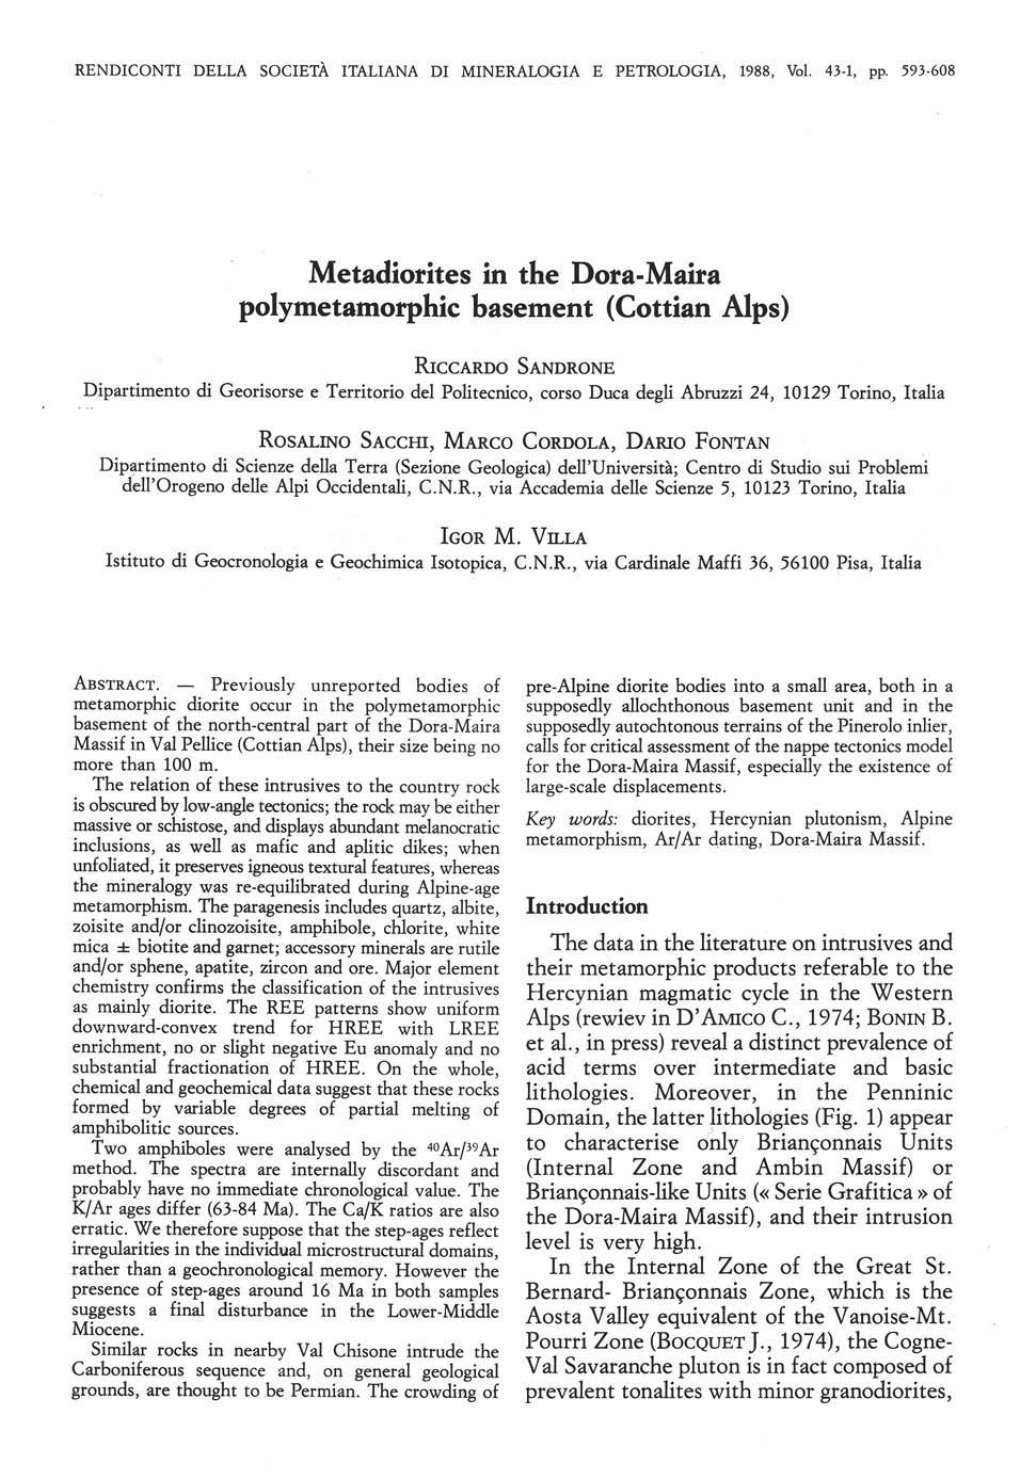 Metadiorites in the Dora·Maira Polymetamorphic Basement (Cottian Alps)